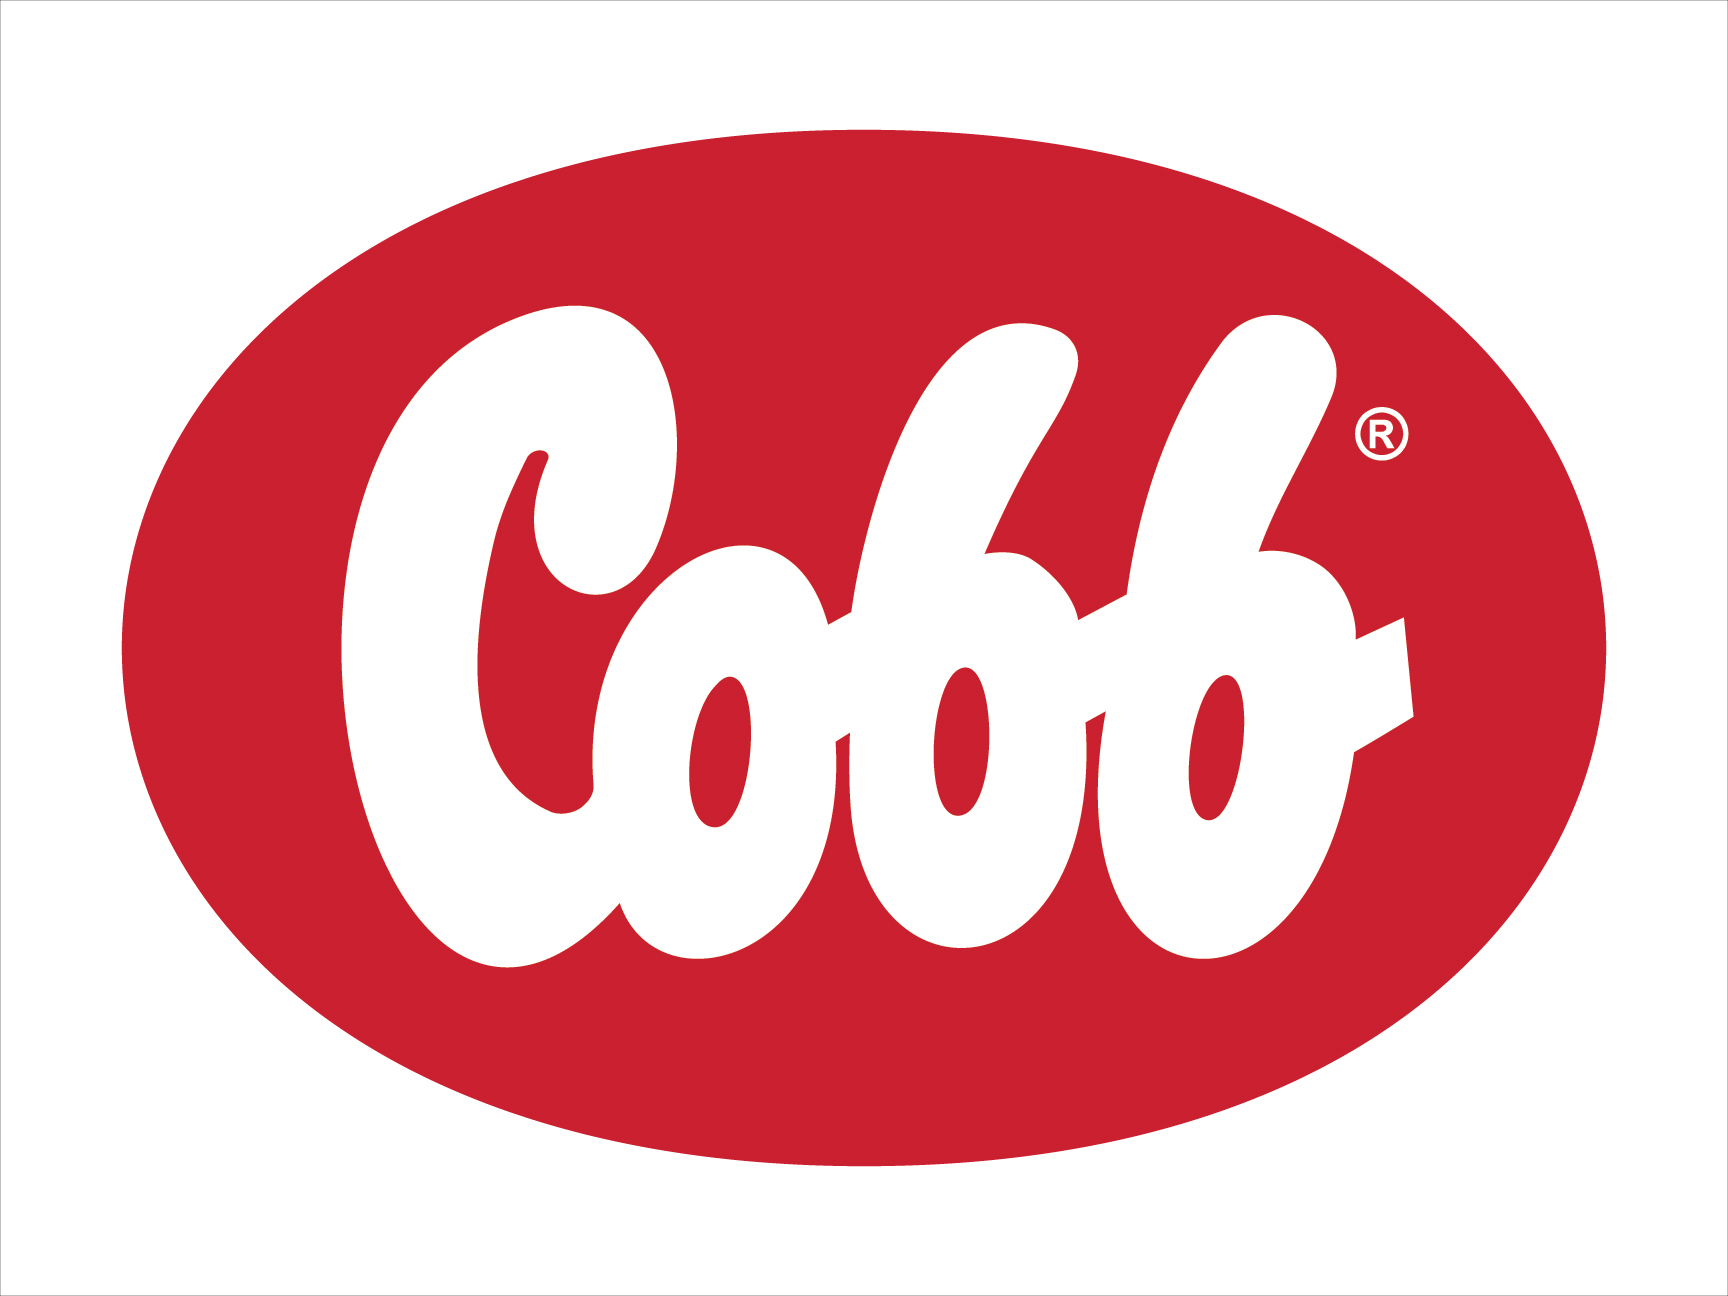 Cobb-Vantress logo